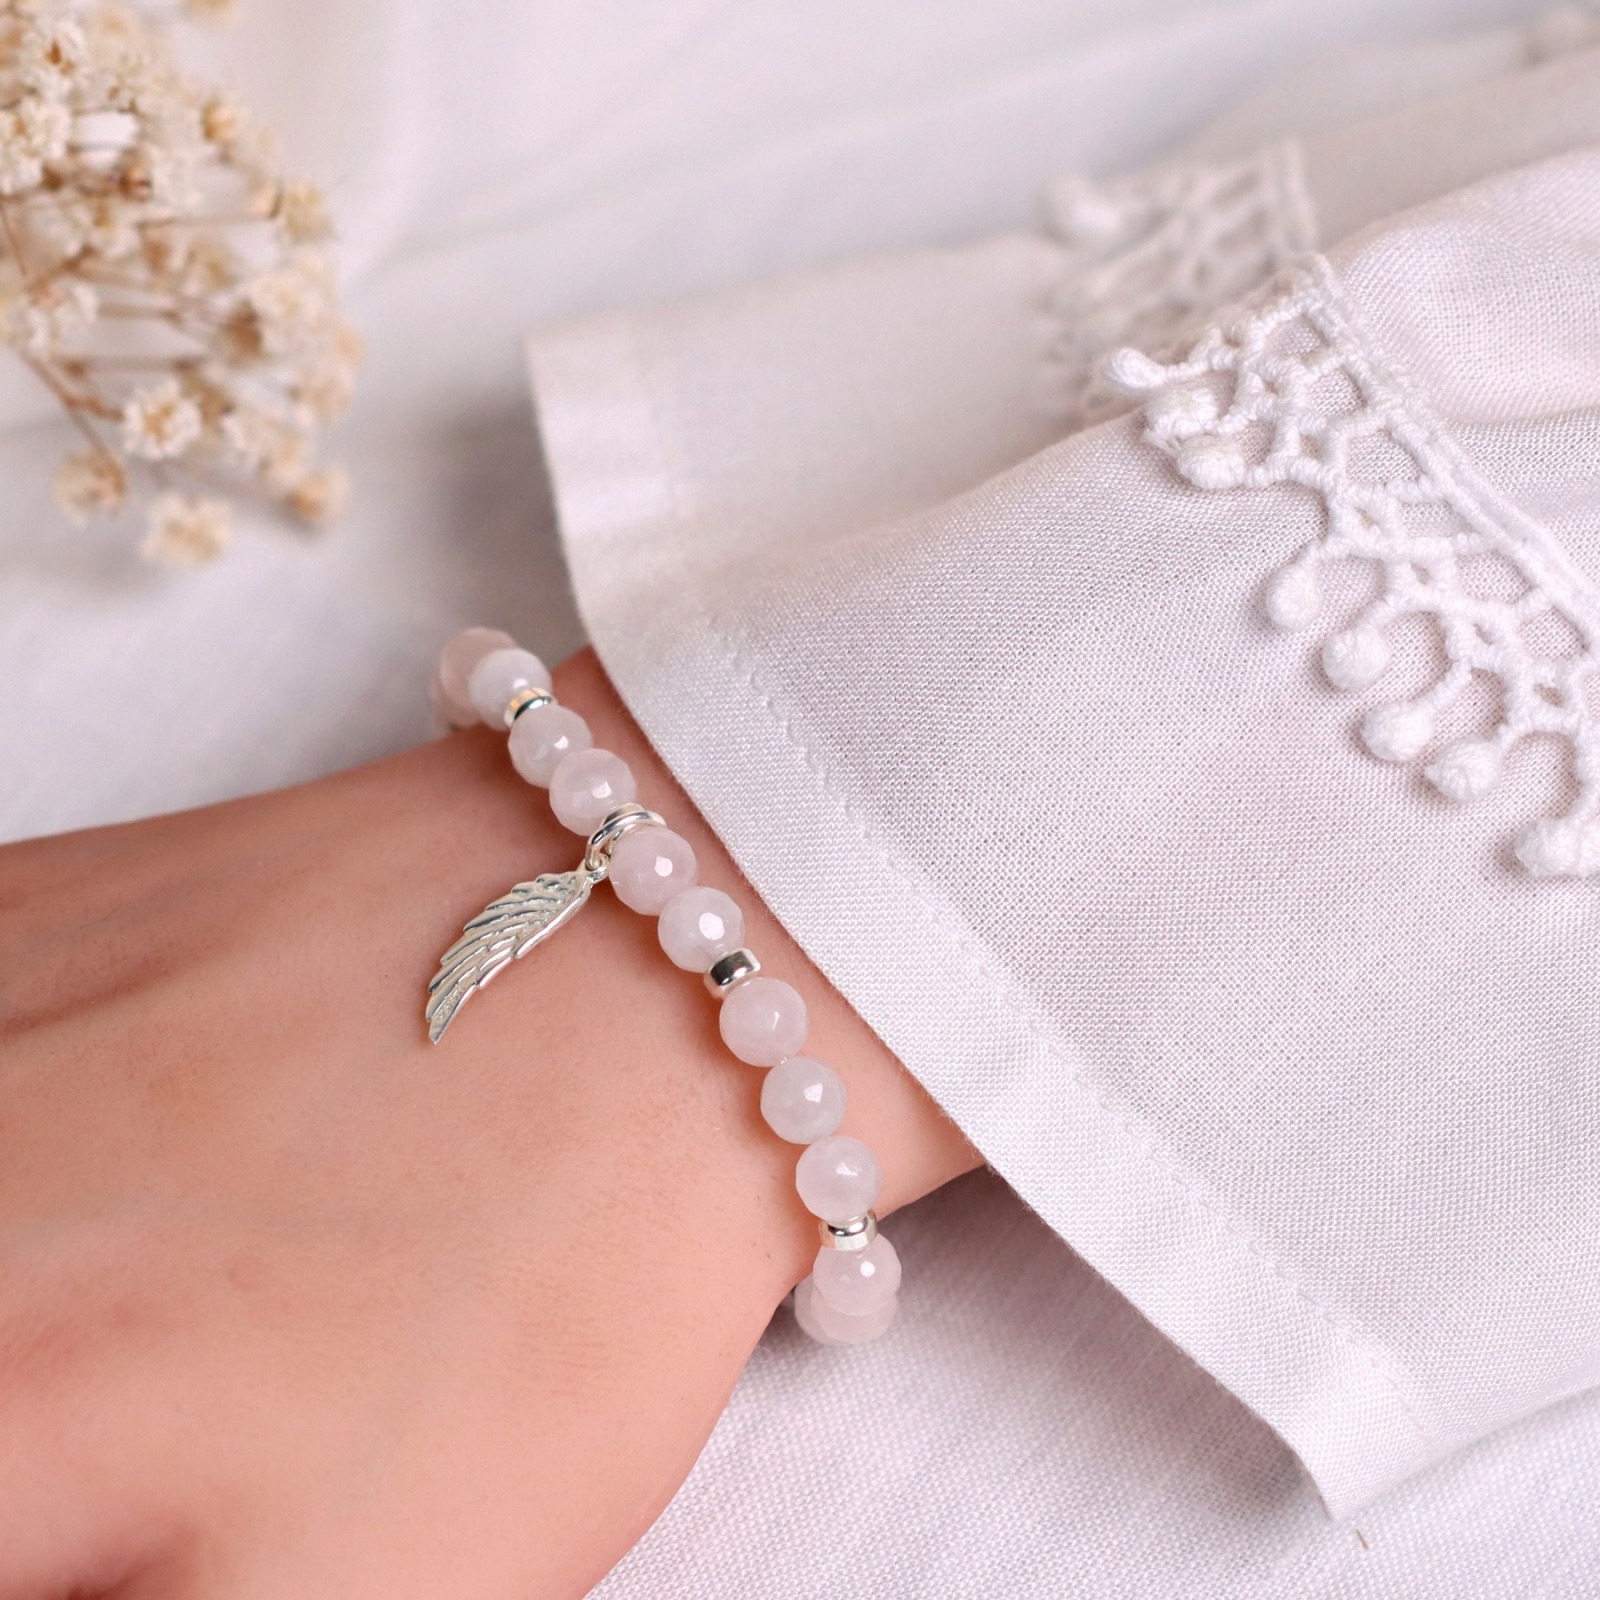 Rosenquarz Armband Frauen mit Engelsflügel, 925er Silber, handmade, perfektes Geschenk zum